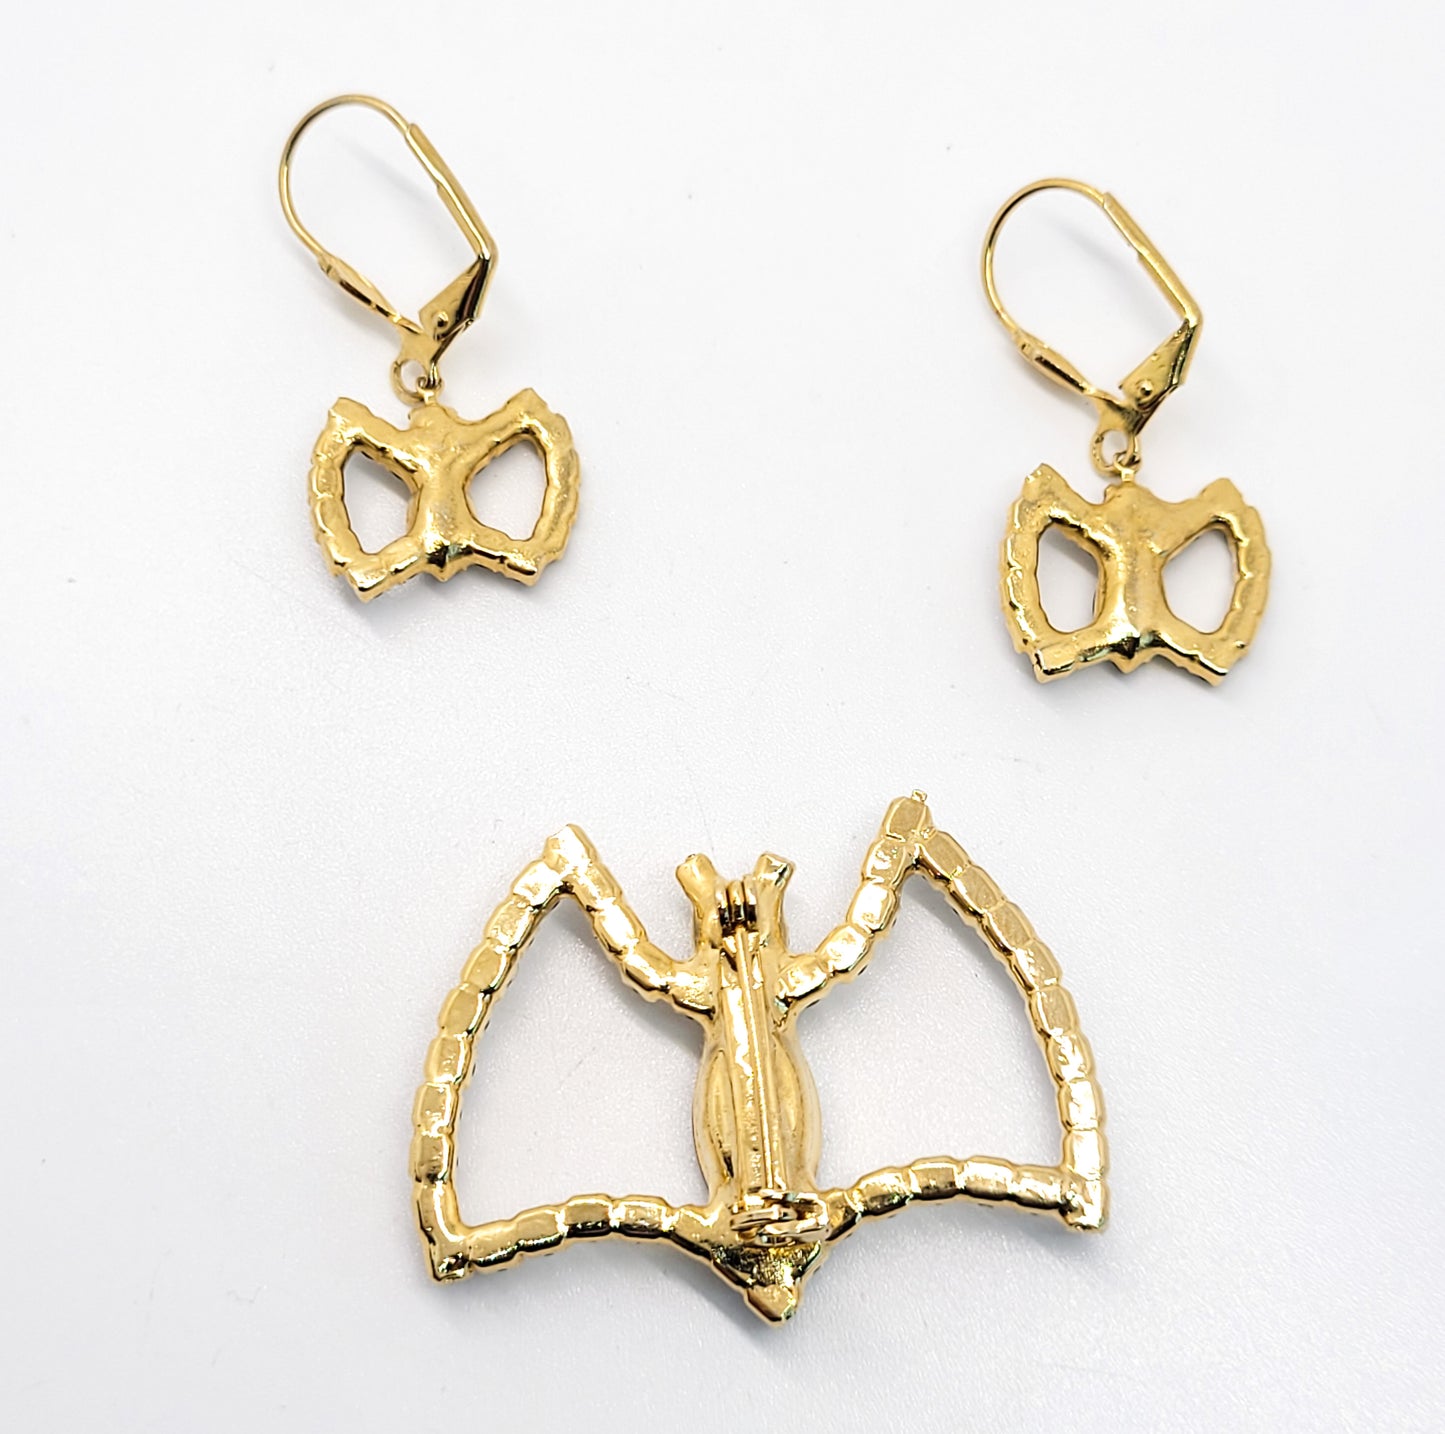 Bats Black and gold black rhinestone brooch and earrings bat demi parure set